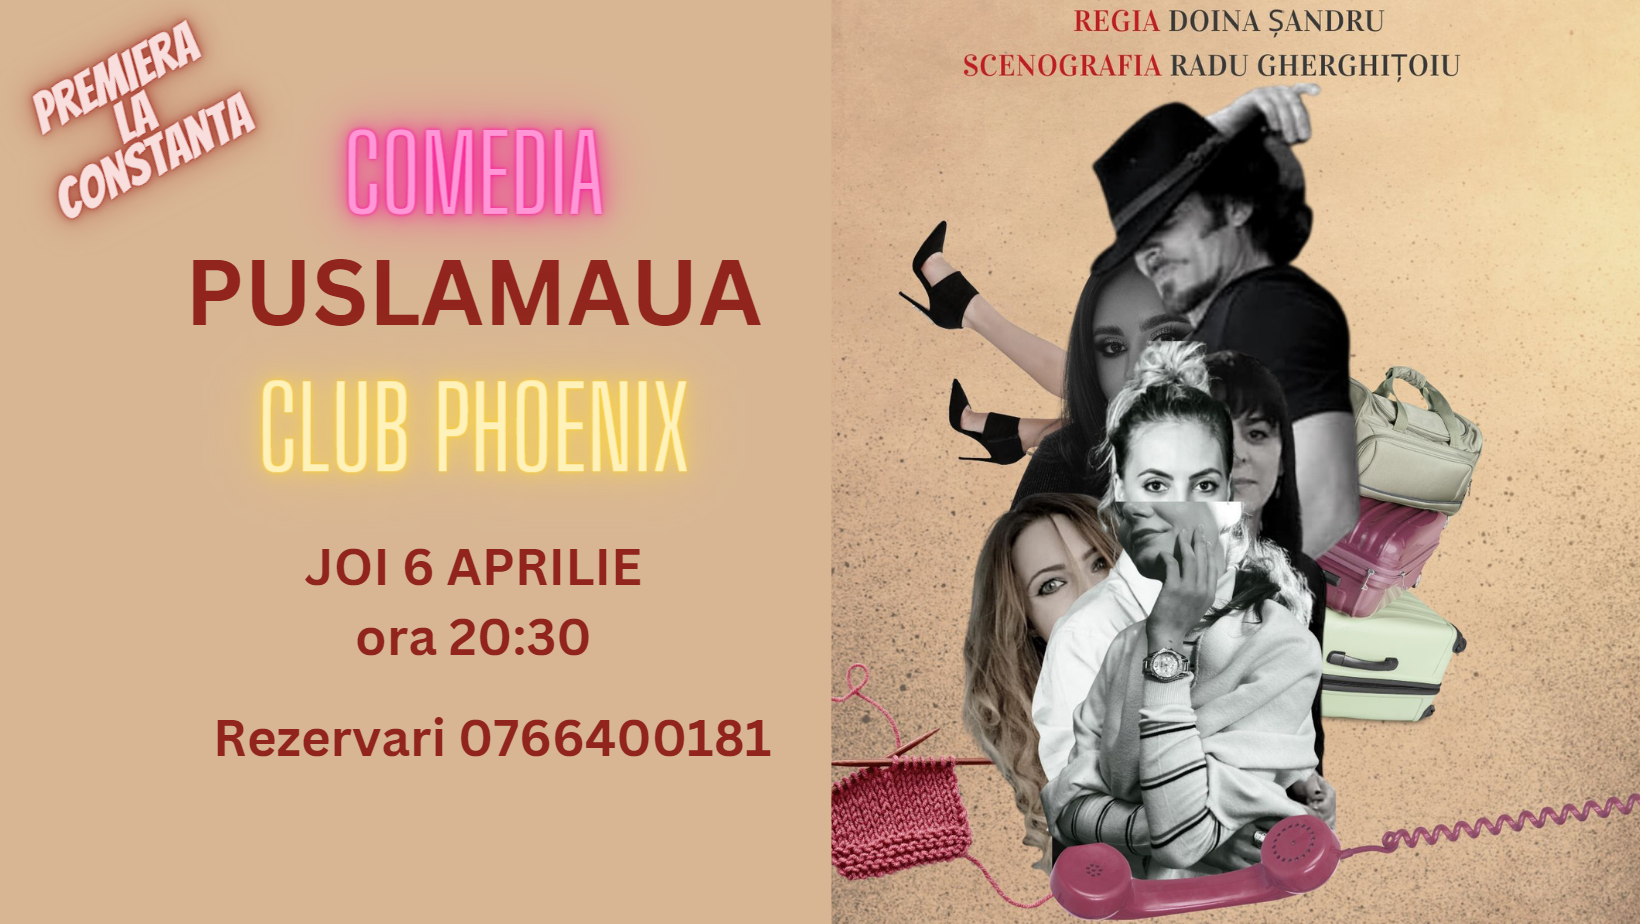 Comedia "PUSLAMAUA" la Club Phoenix pe 6 aprilie